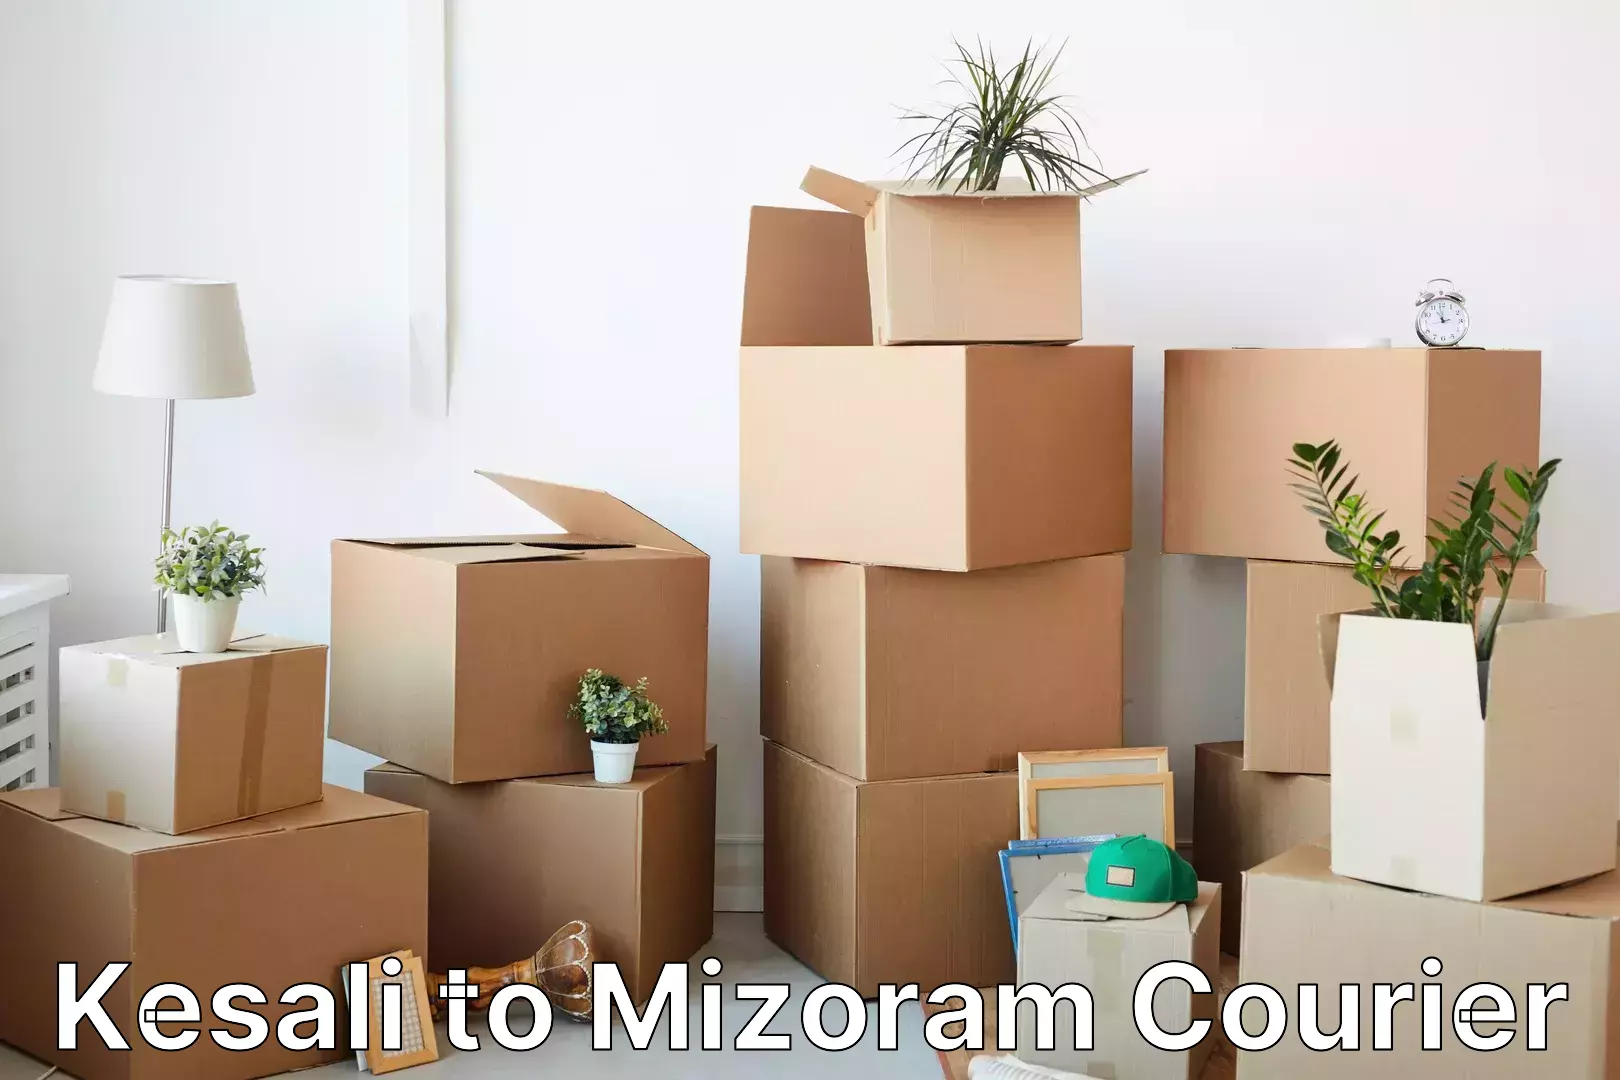 Efficient cargo handling Kesali to Mizoram